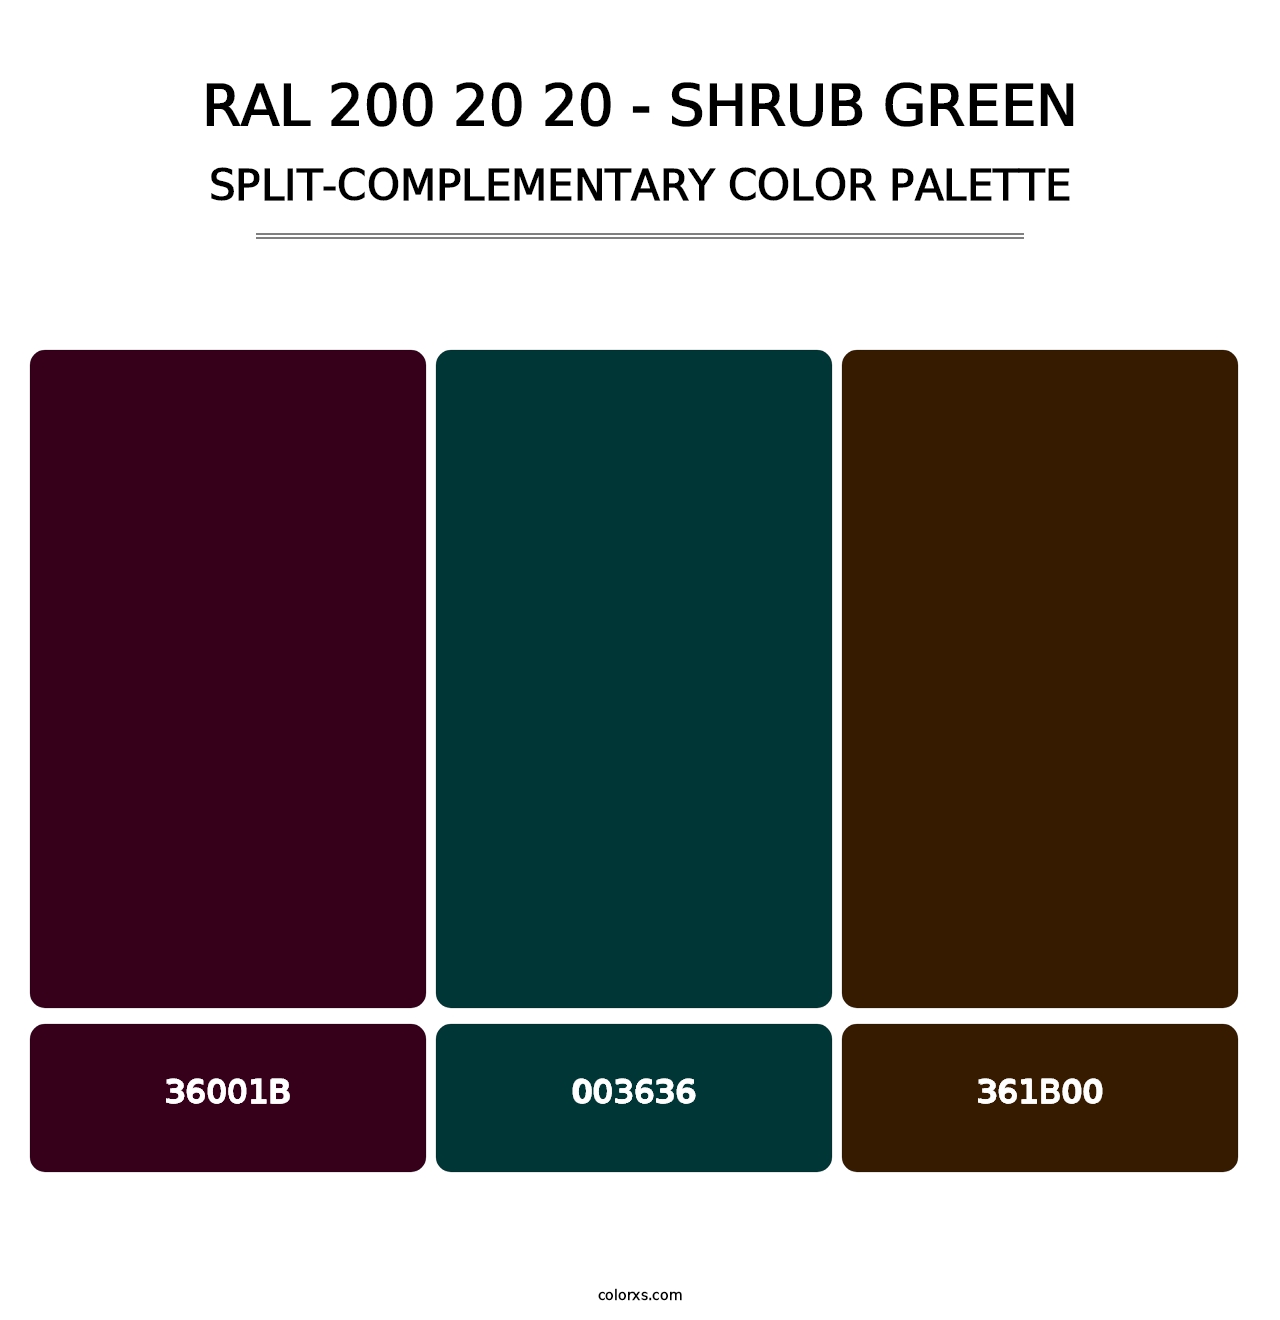 RAL 200 20 20 - Shrub Green - Split-Complementary Color Palette